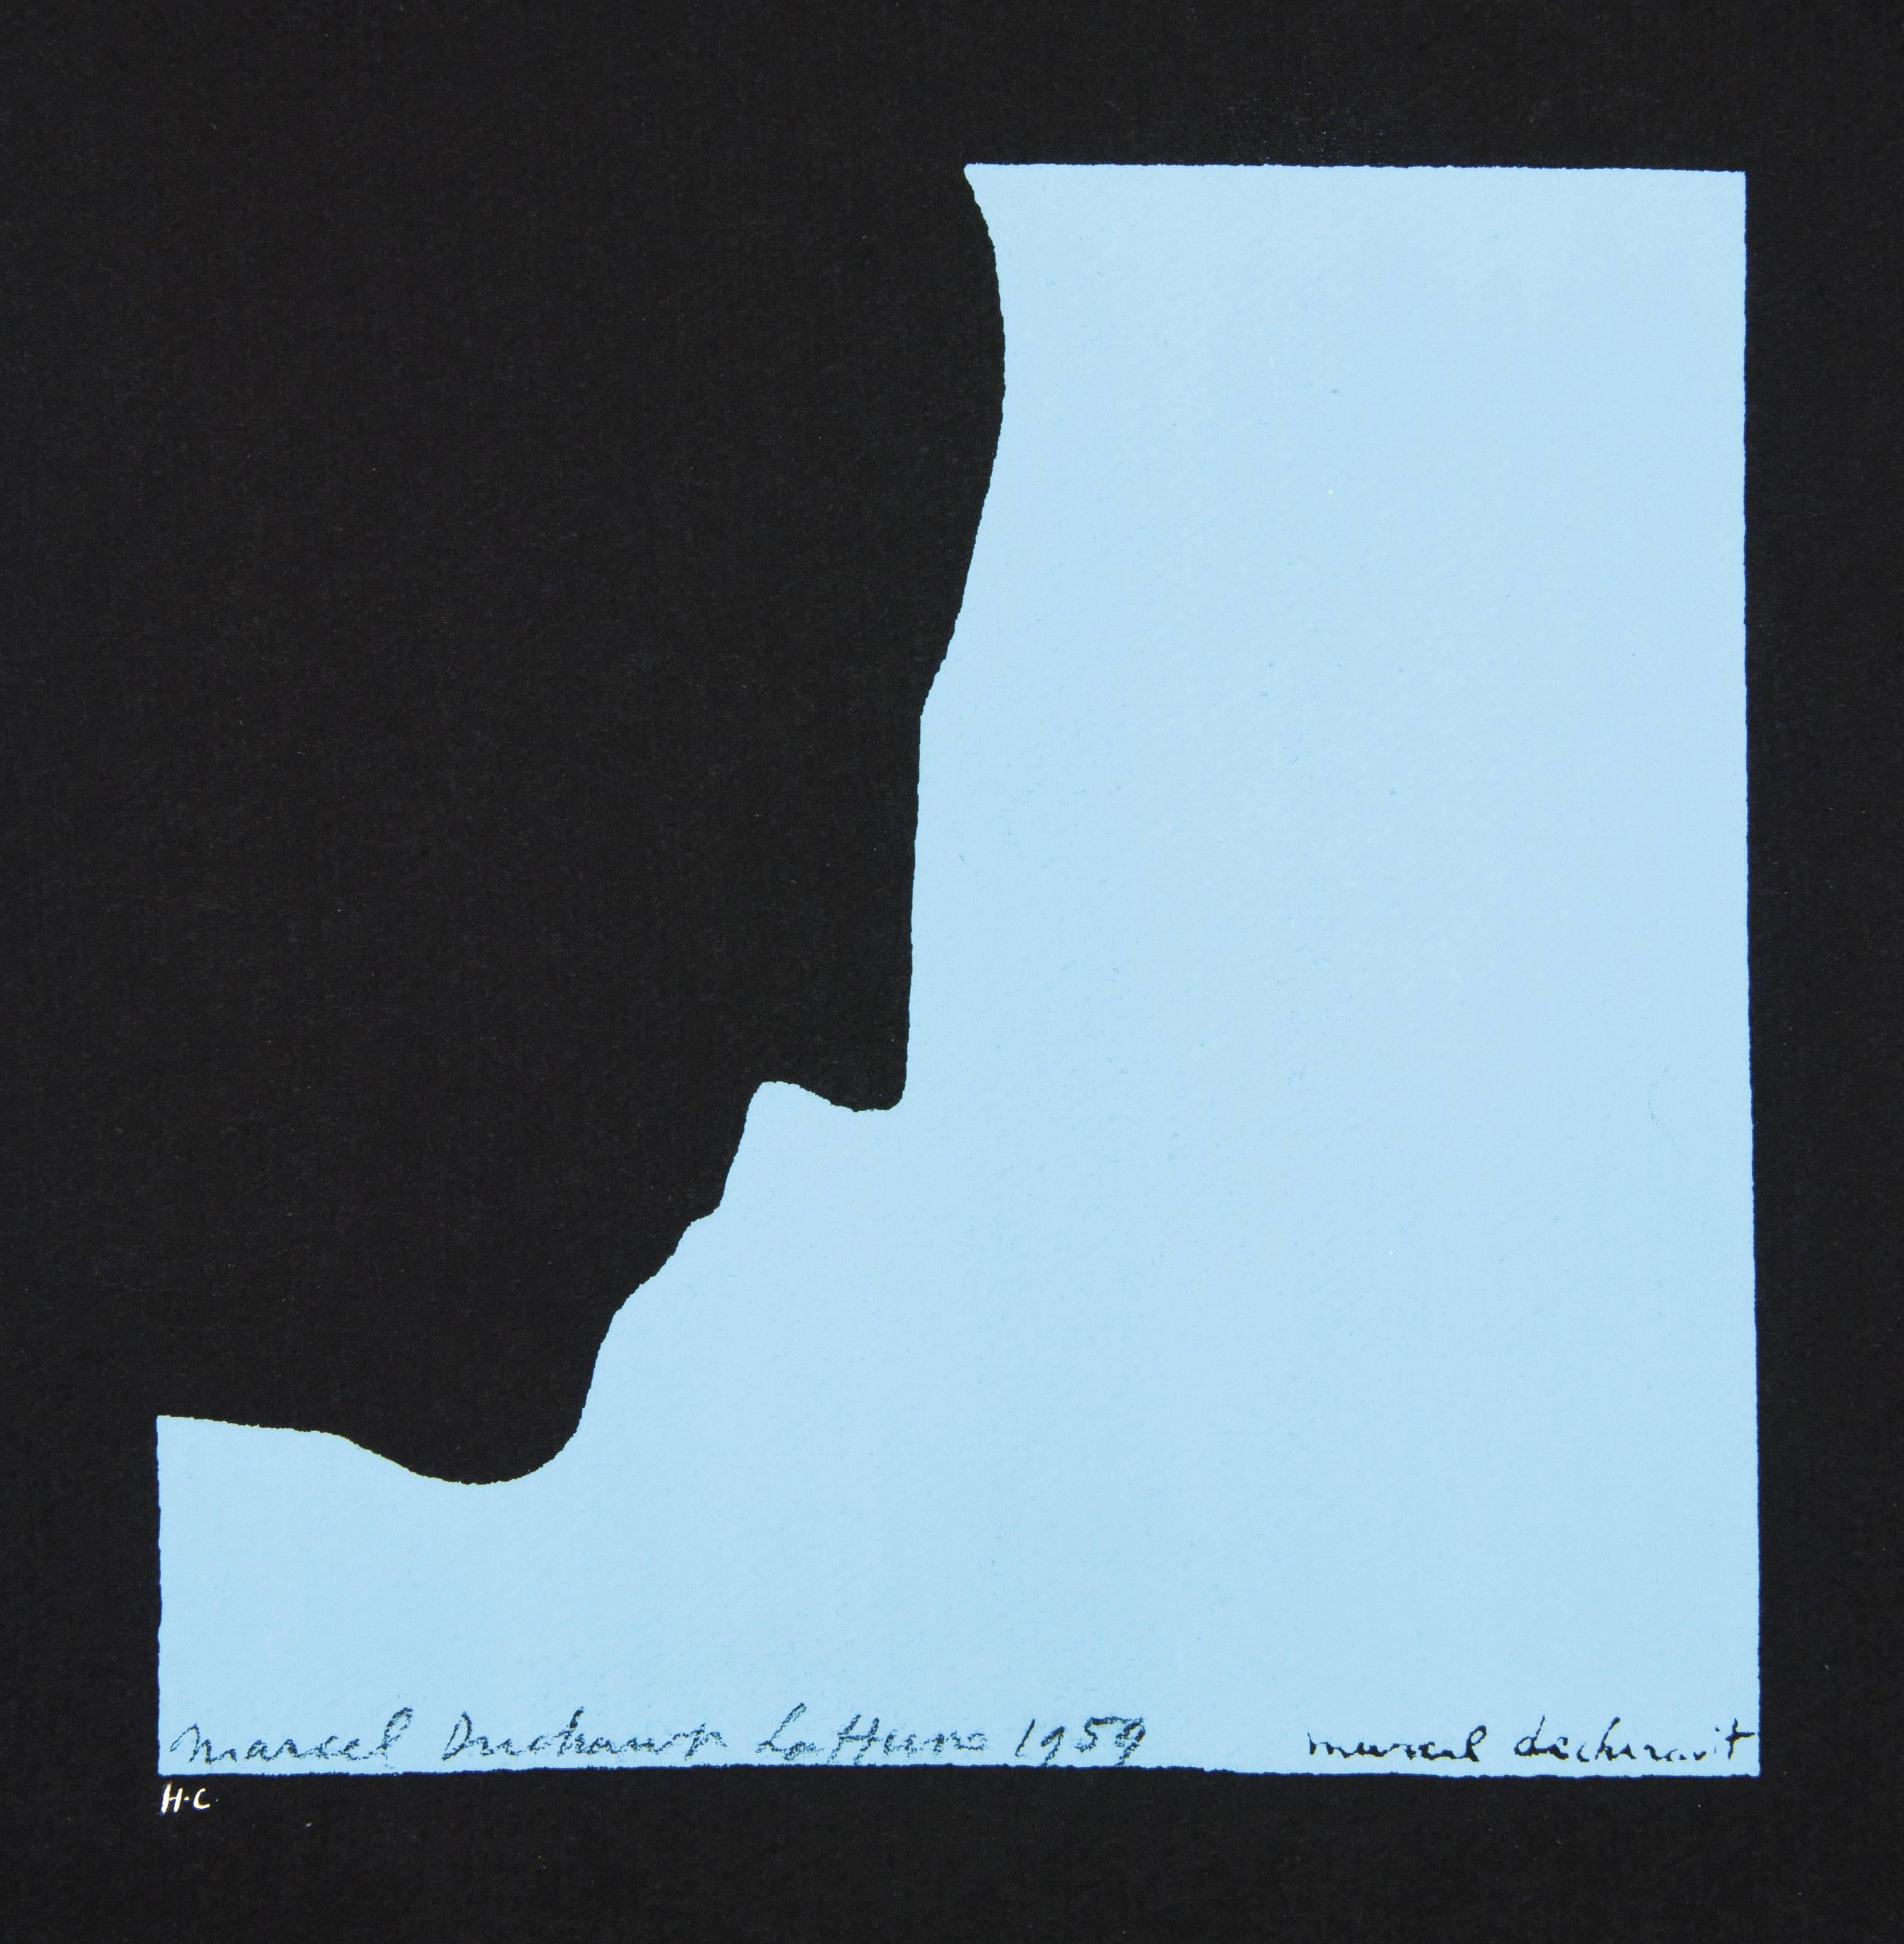 DUCHAMP. Five Original Duchamp Screen-Print Posters: Self Portrait in Profile - Black Portrait Print by Marcel Duchamp